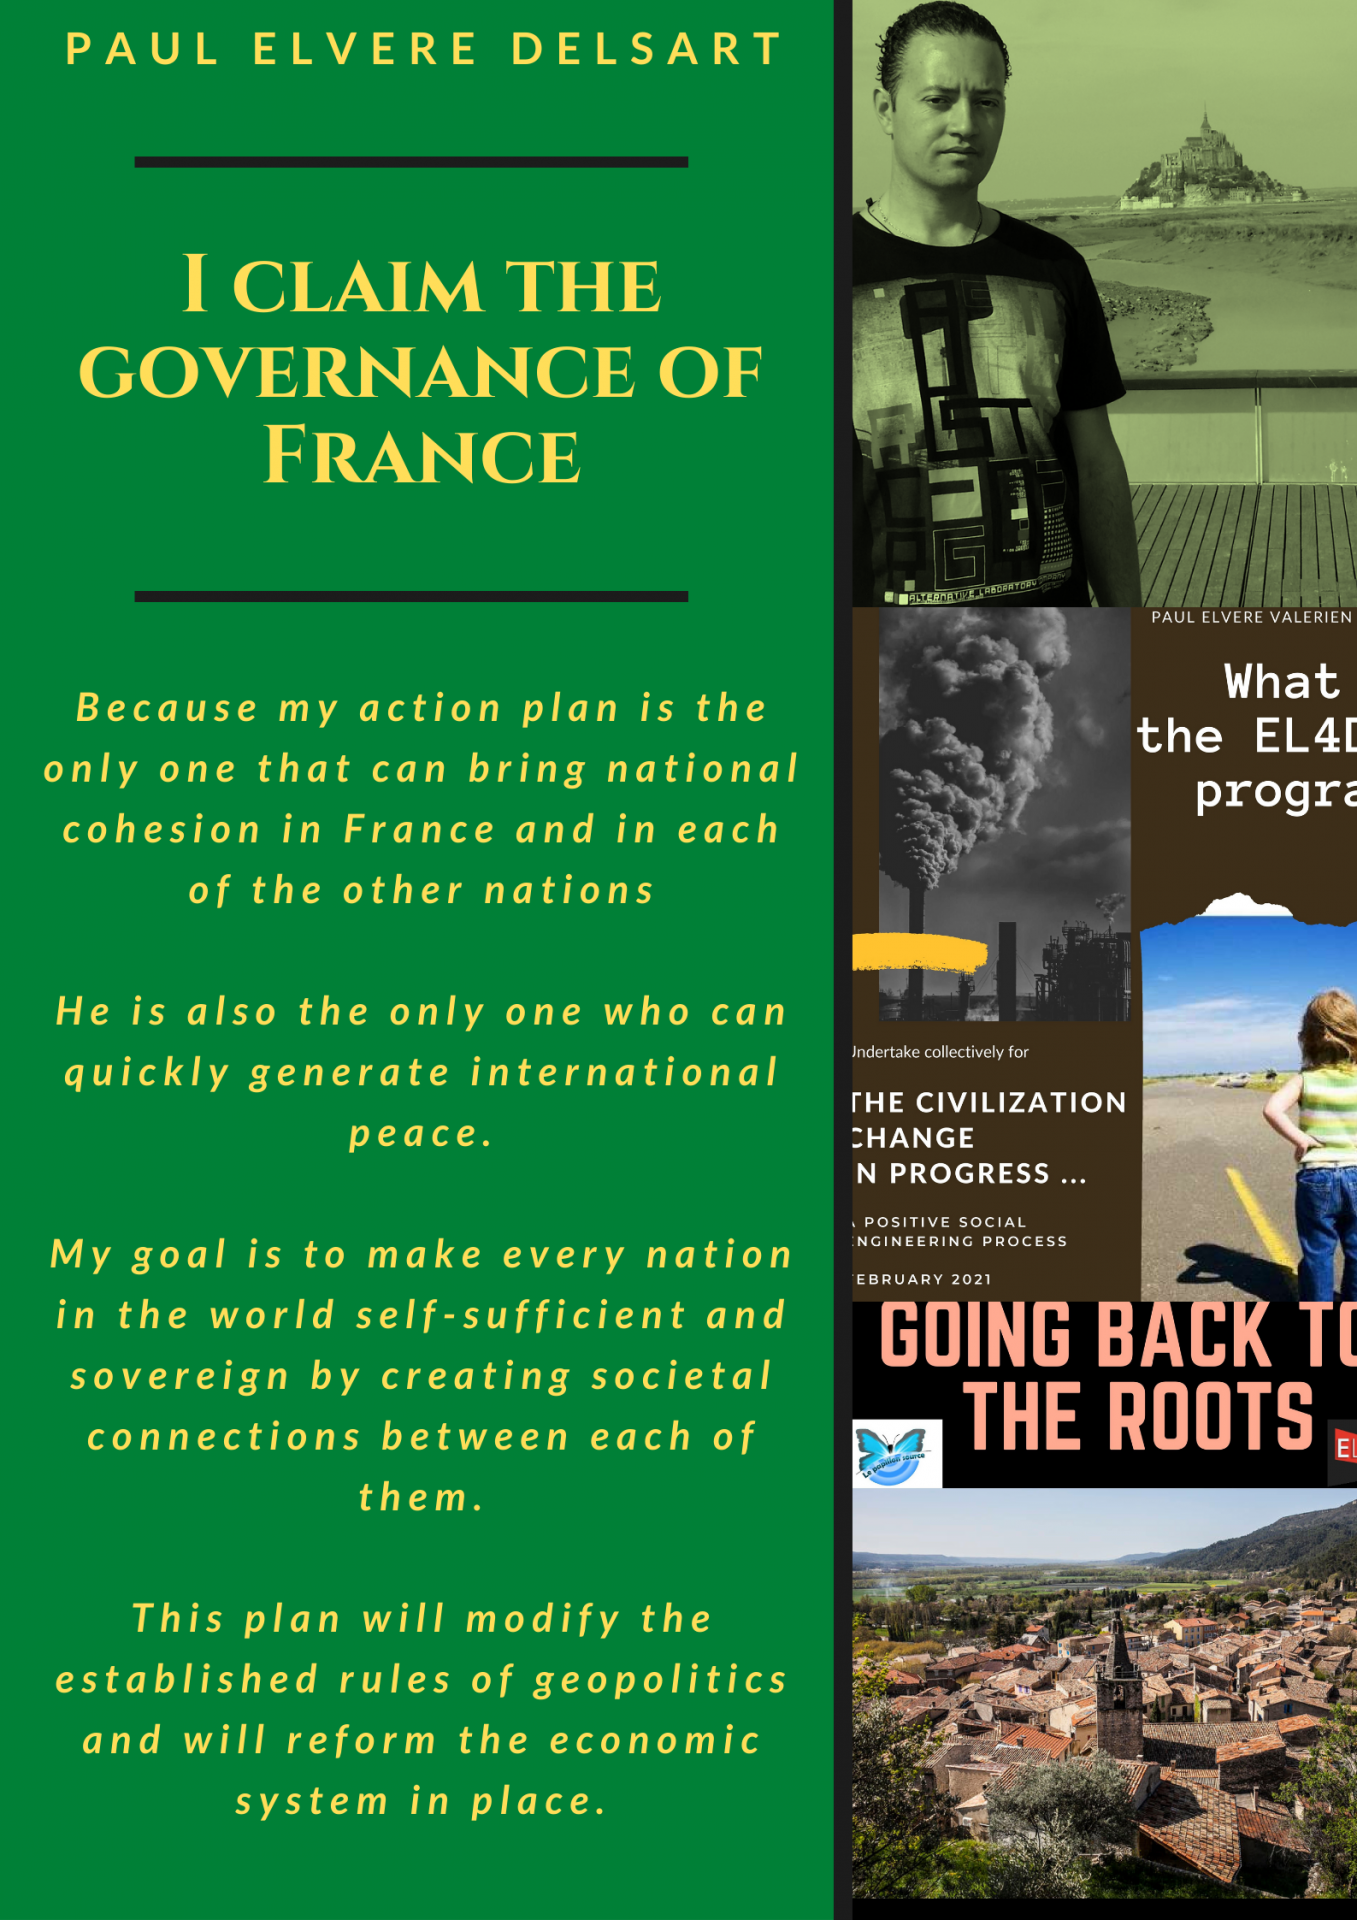 Paul elvere delsart claims the governance of france 1